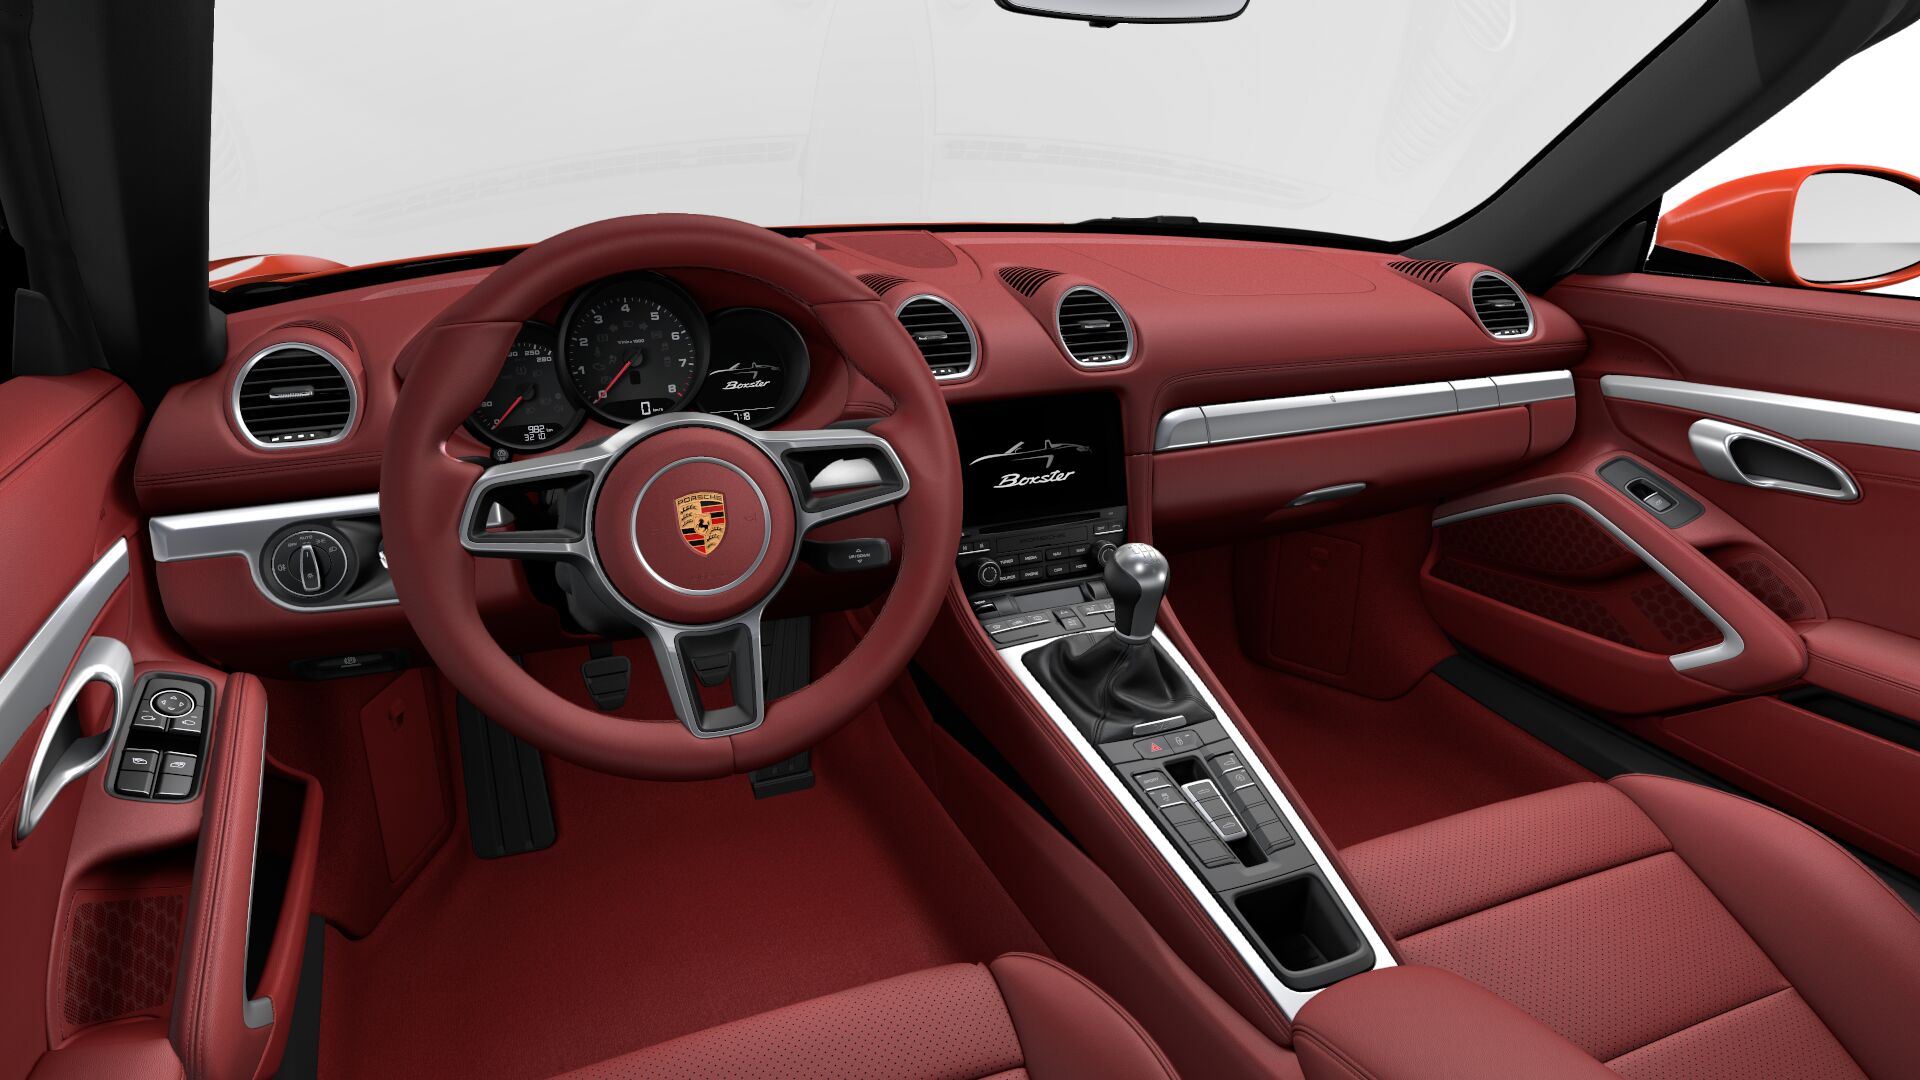 Porsche 718 Boxster S interior front view